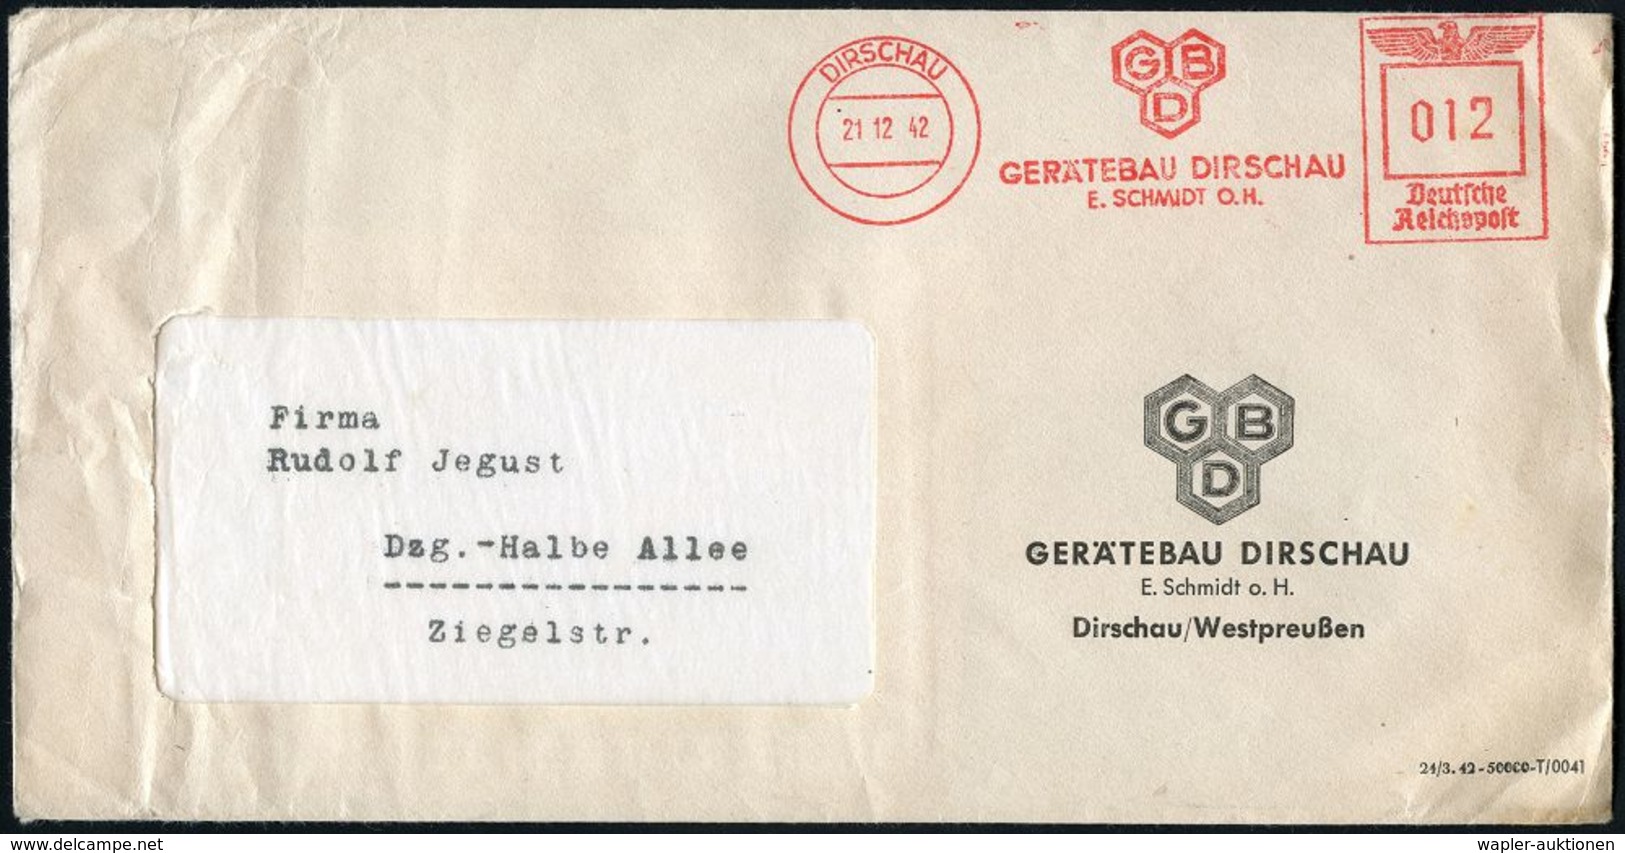 MILITÄRFLUGWESEN / MILITÄRFLUGZEUGE : DIRSCHAU/ GBD/ GERÄTEBAU DIRSCHU/ E.SCHMIDT O.H. 1942 (21.12.) Sehr Seltener AFS ( - Flugzeuge